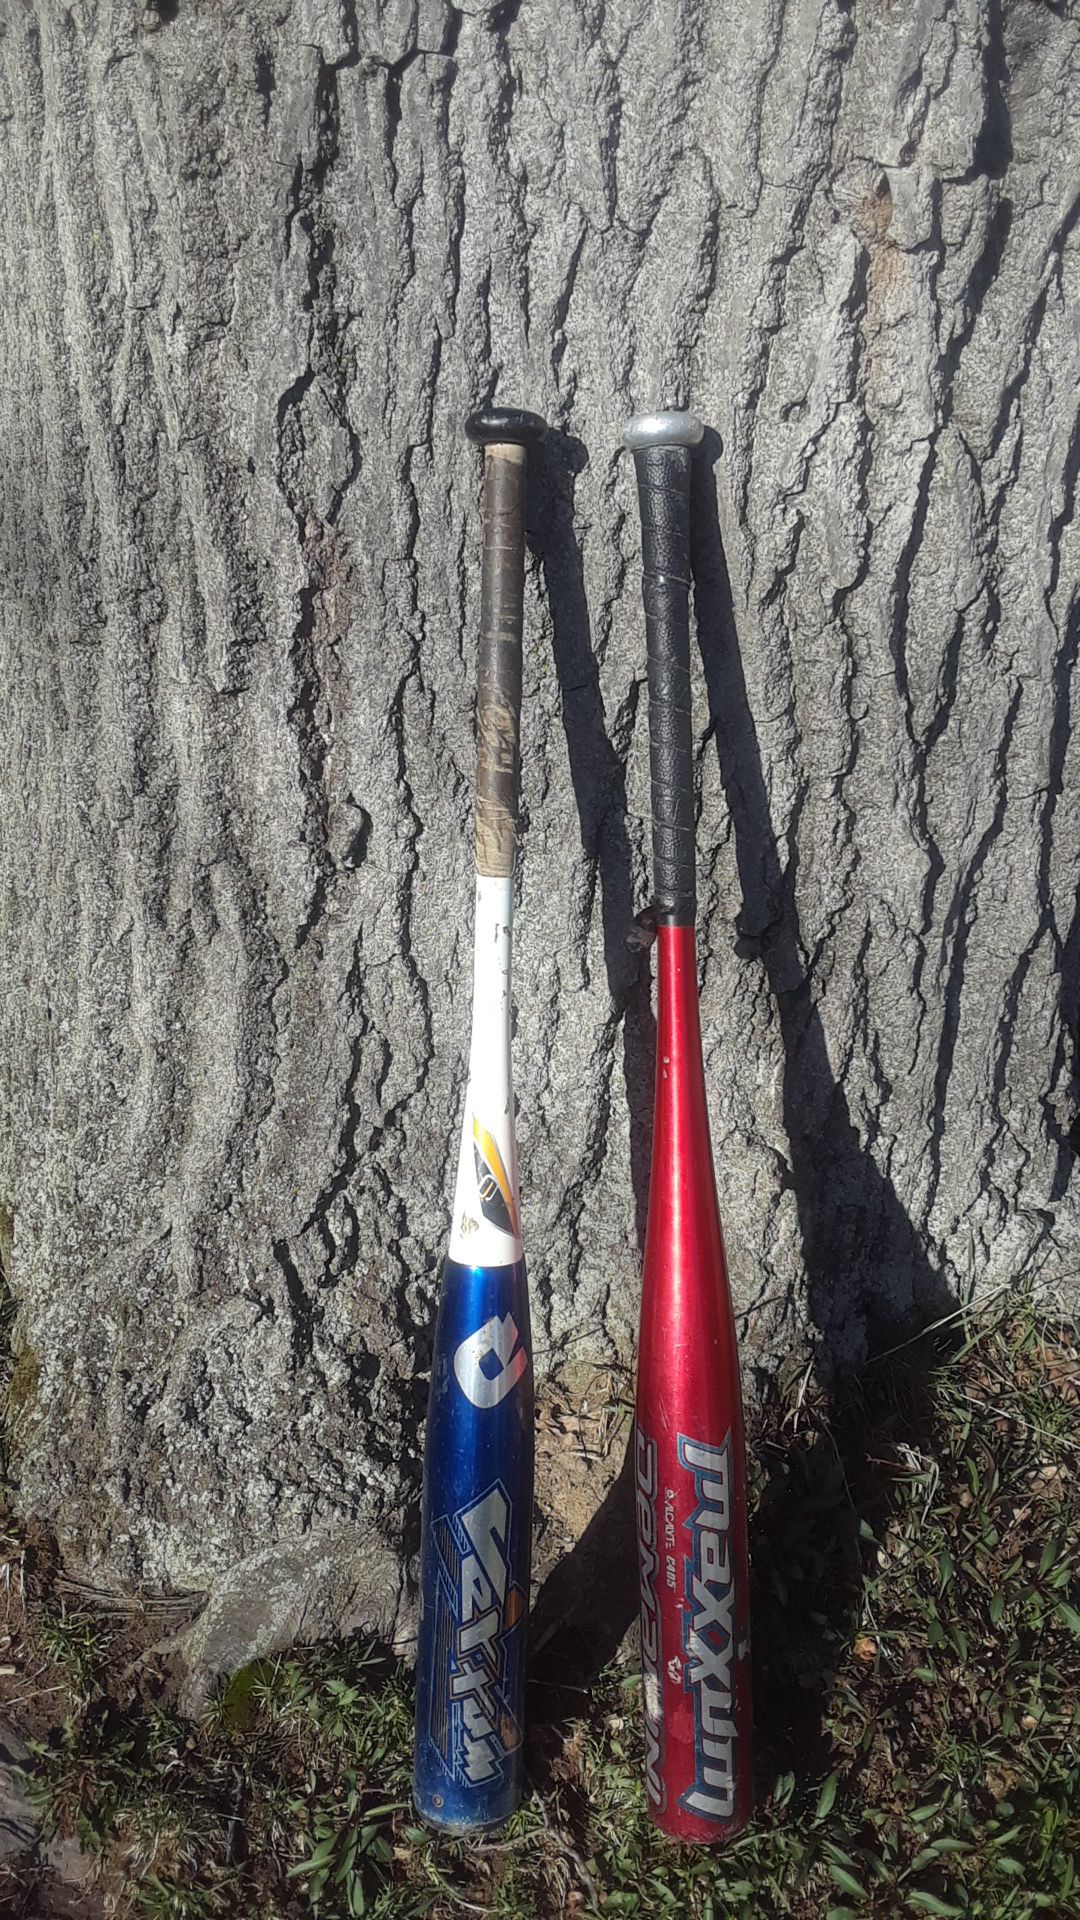 2 used Demarini -3 baseball bats